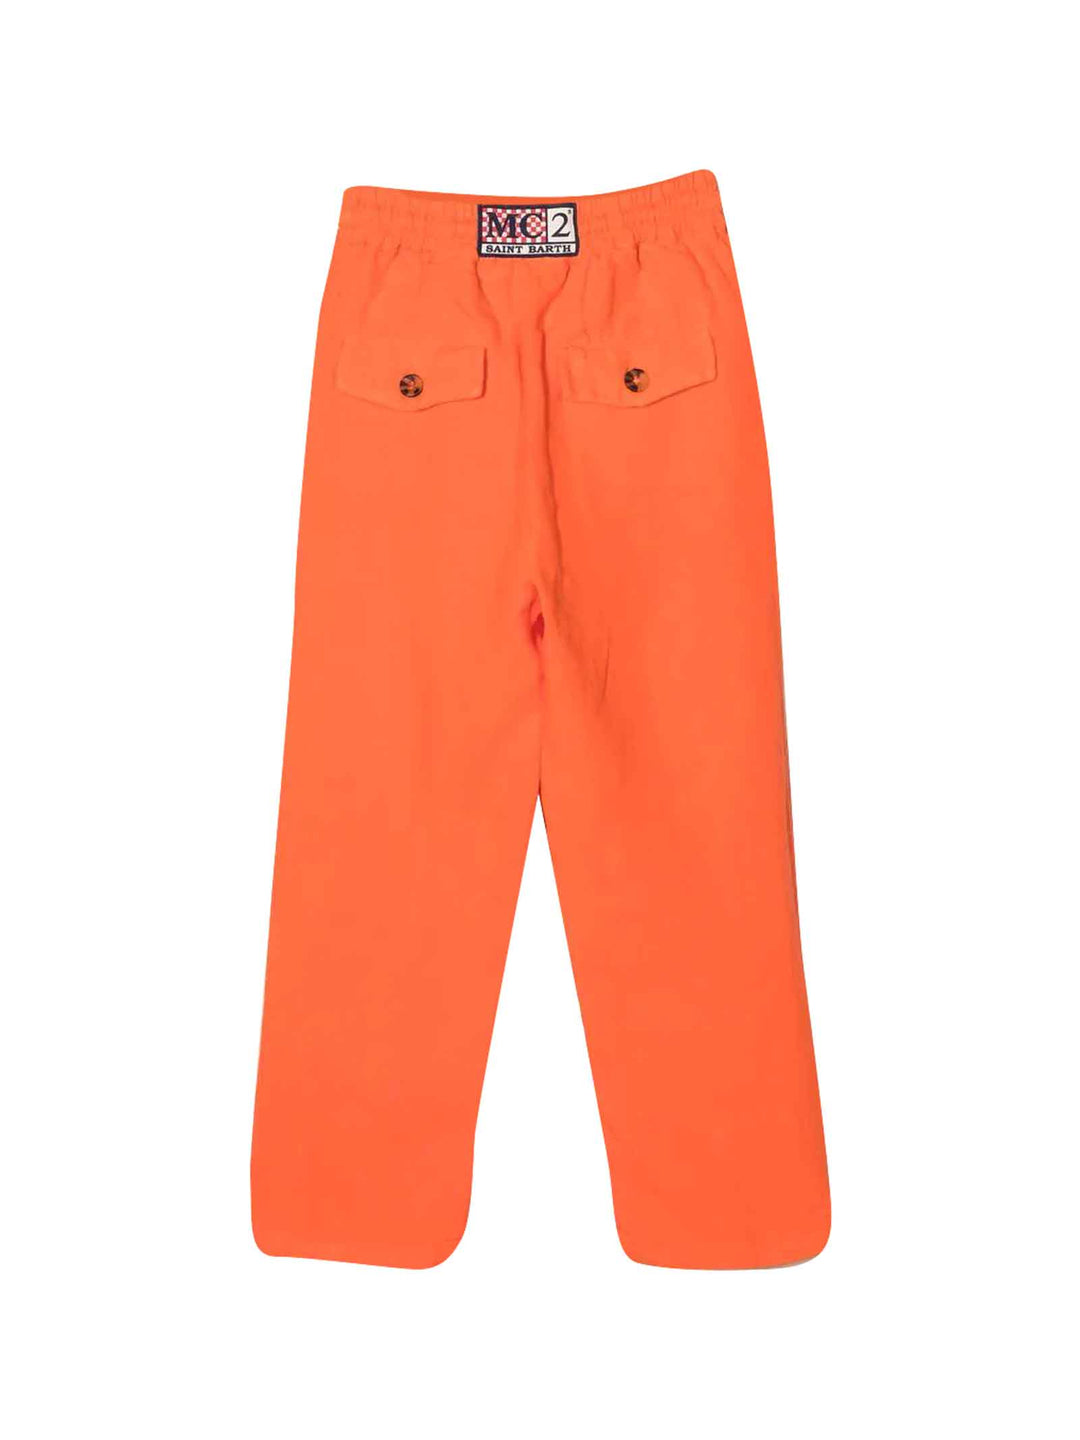 Pantaloni arancio unisex